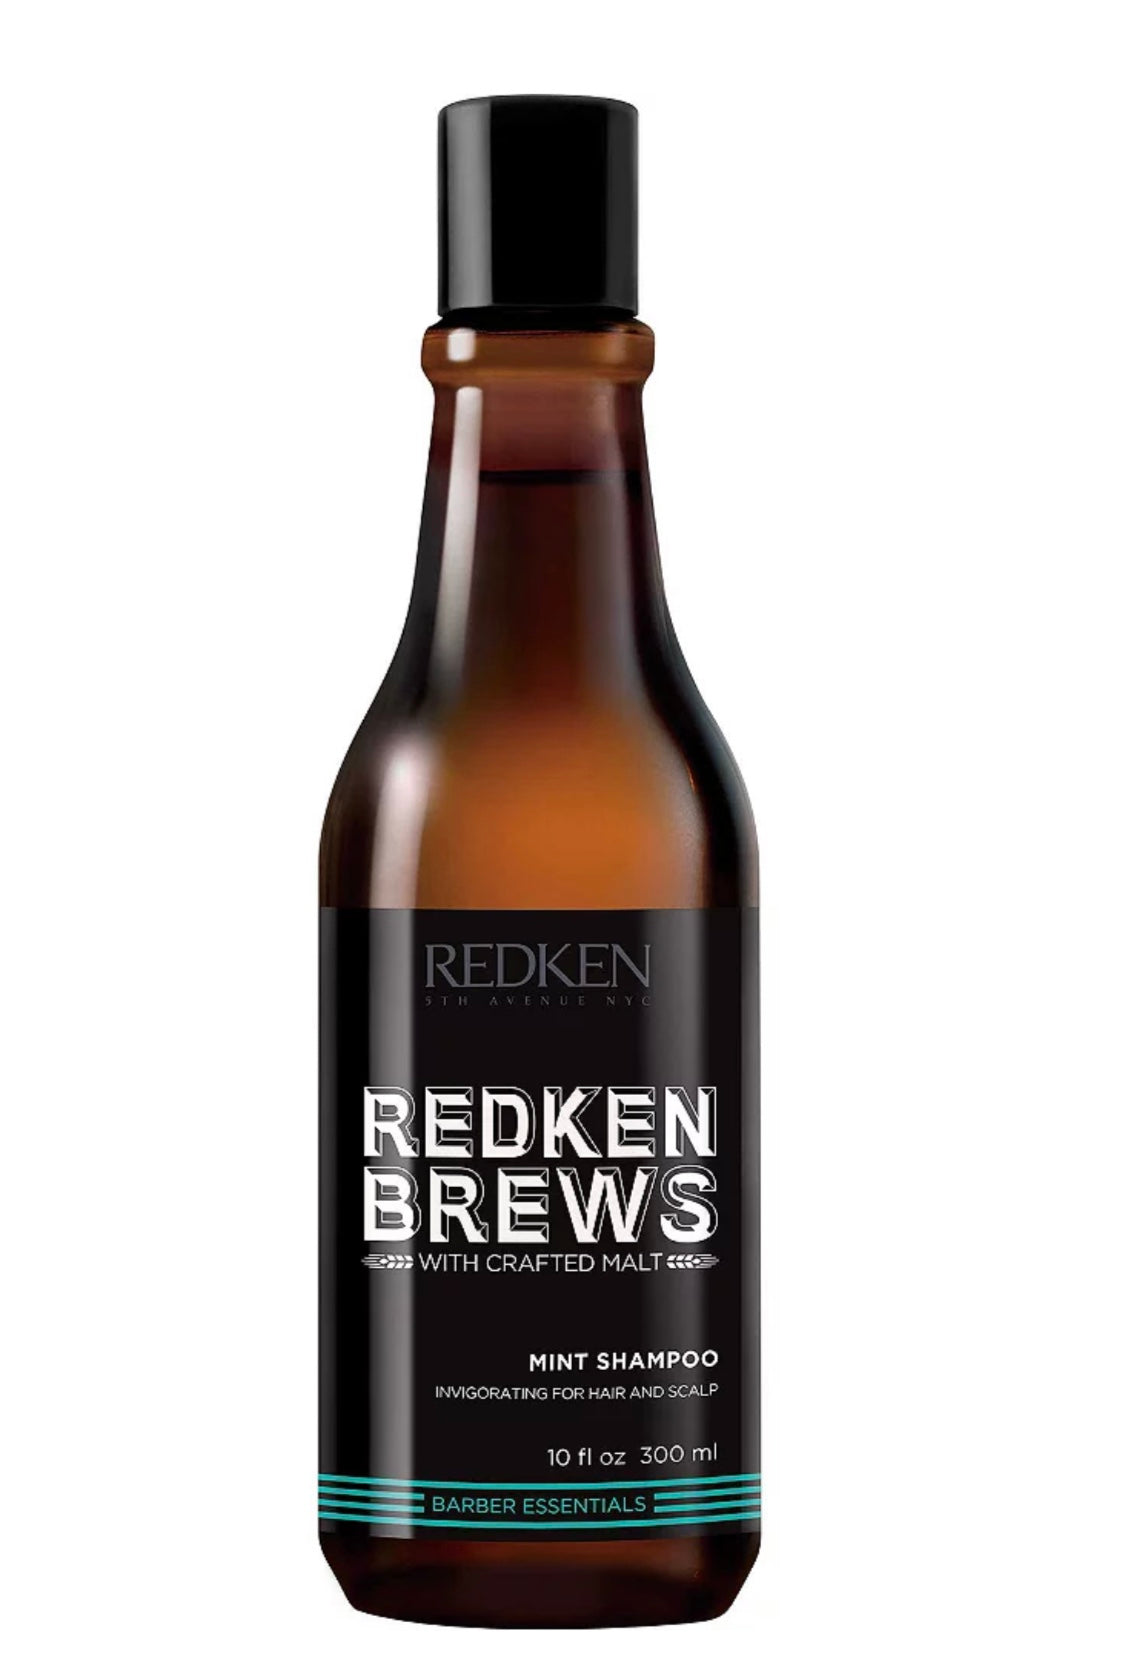 Redken - Brews mint shampoo 10 fl. oz./ 300ml